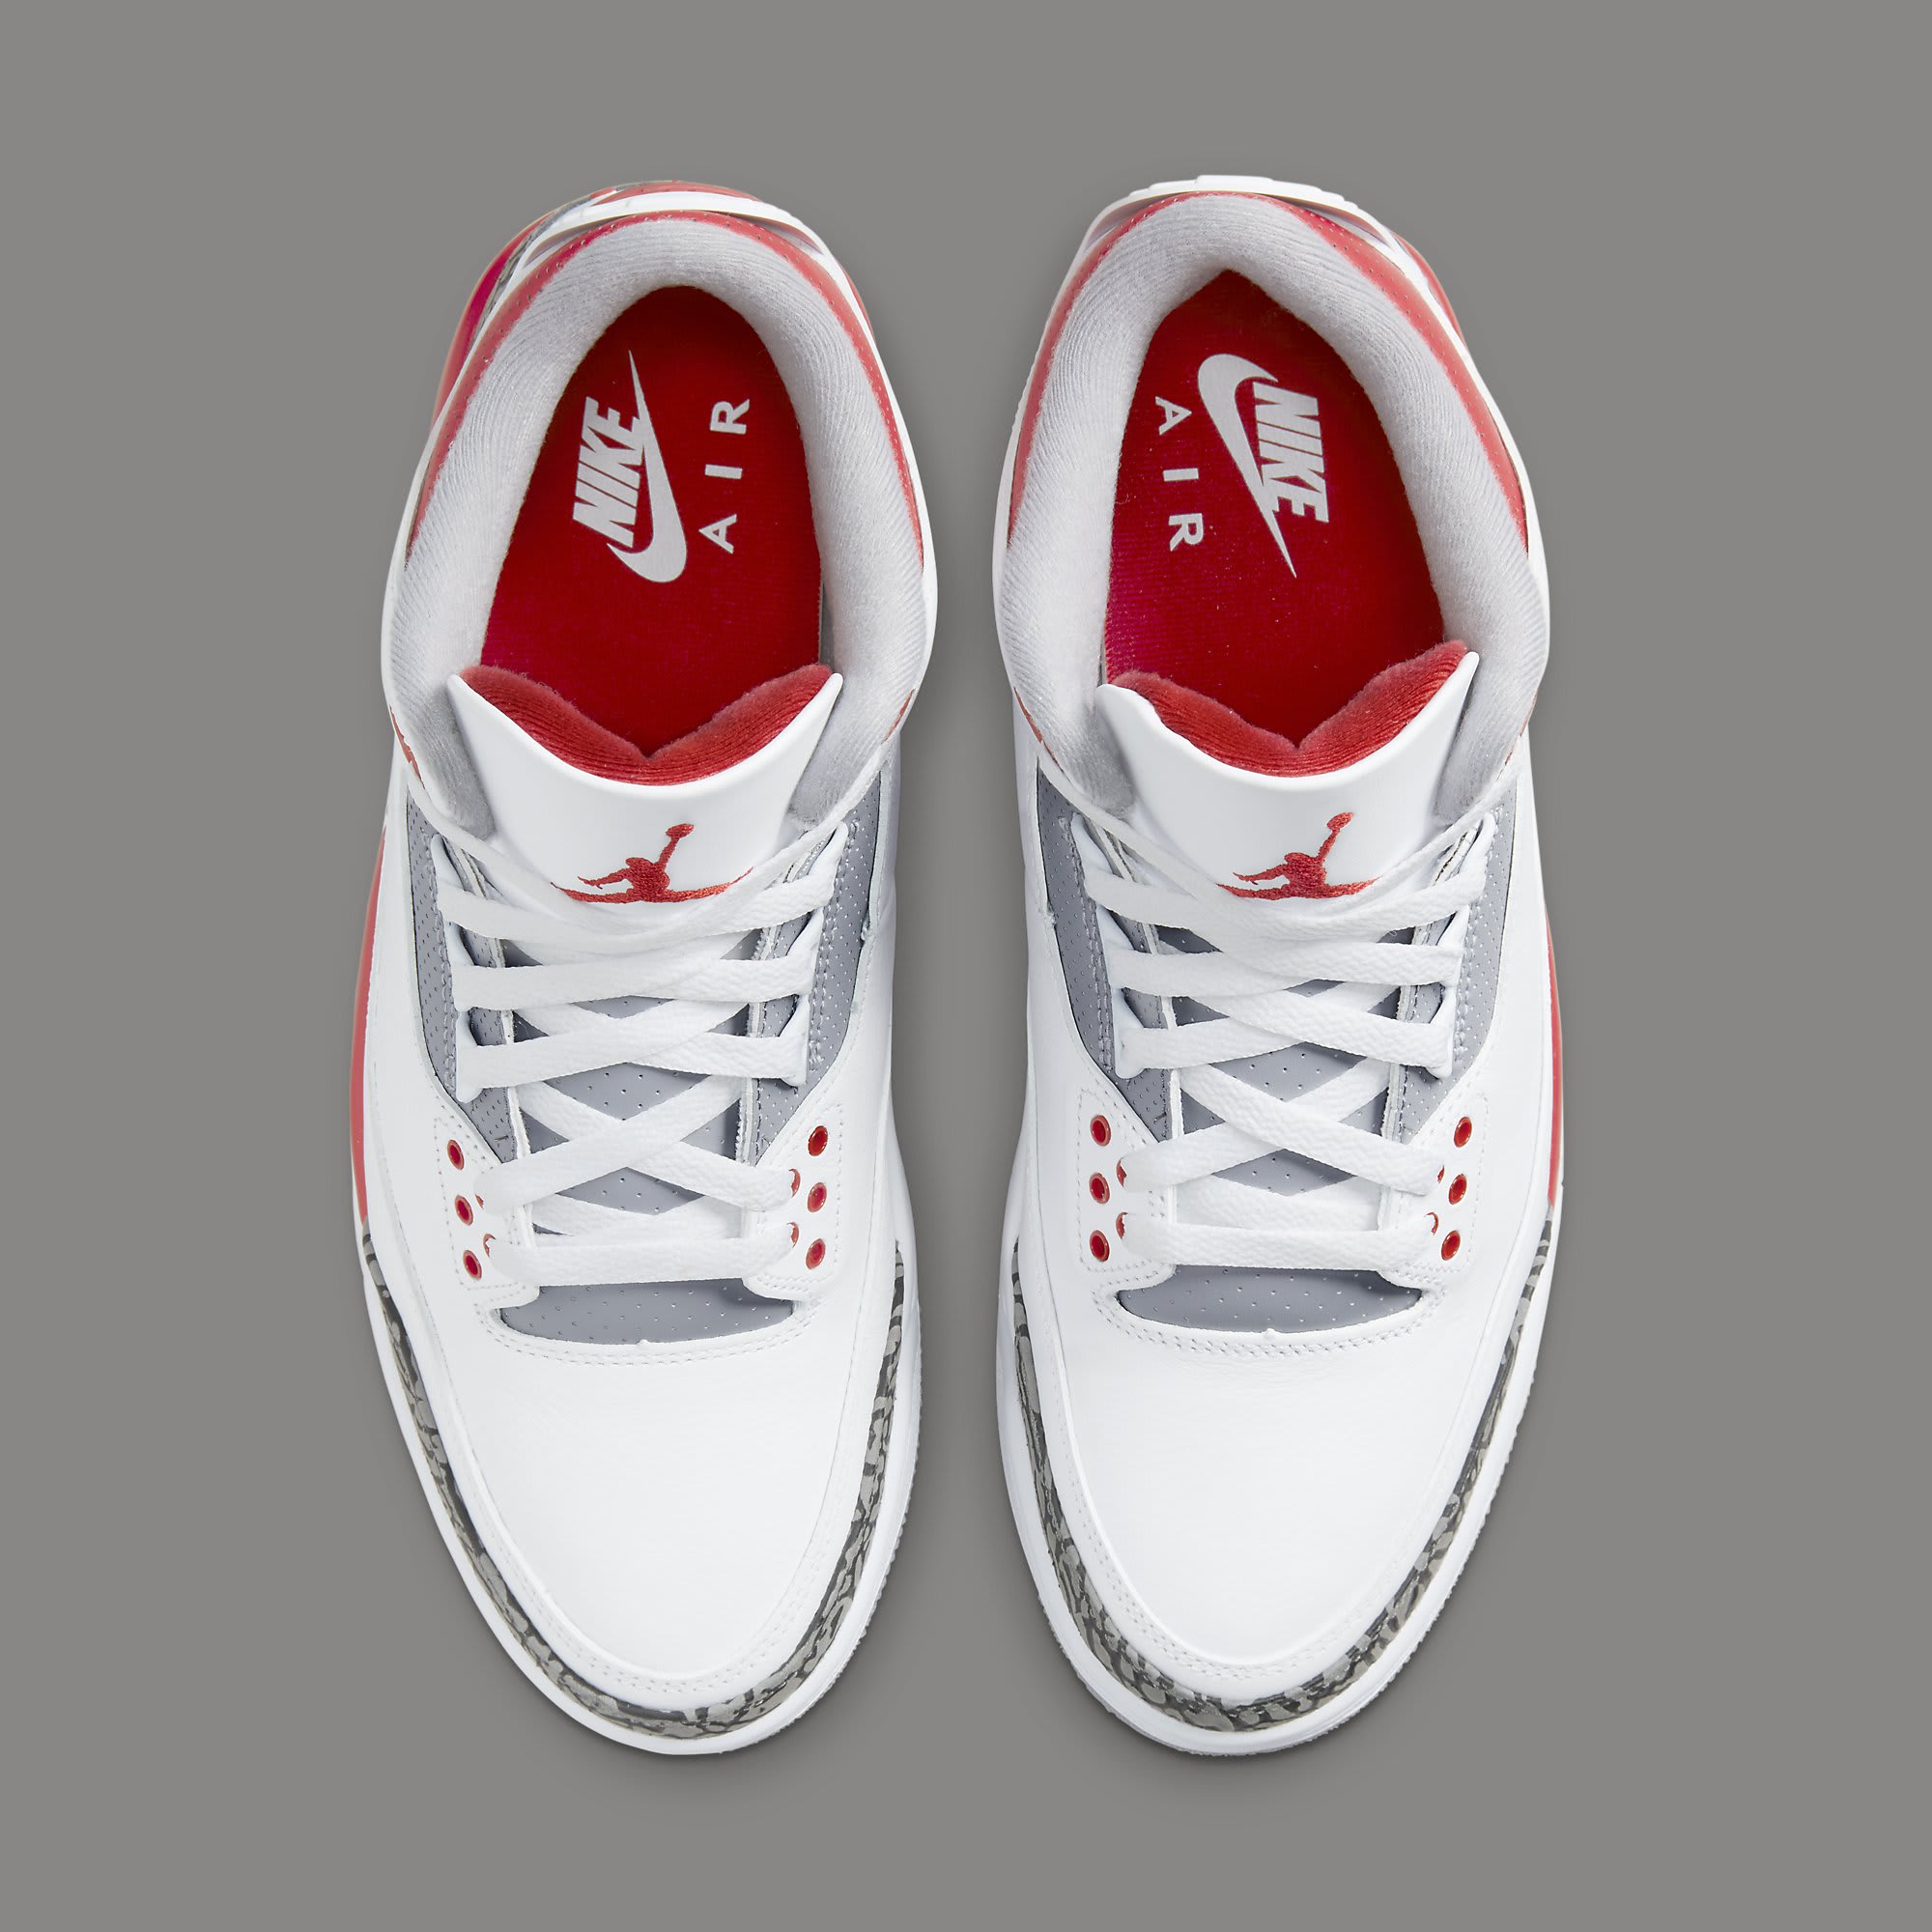 Air Jordan 3 III Fire Red Release Date DN3707-160 Top